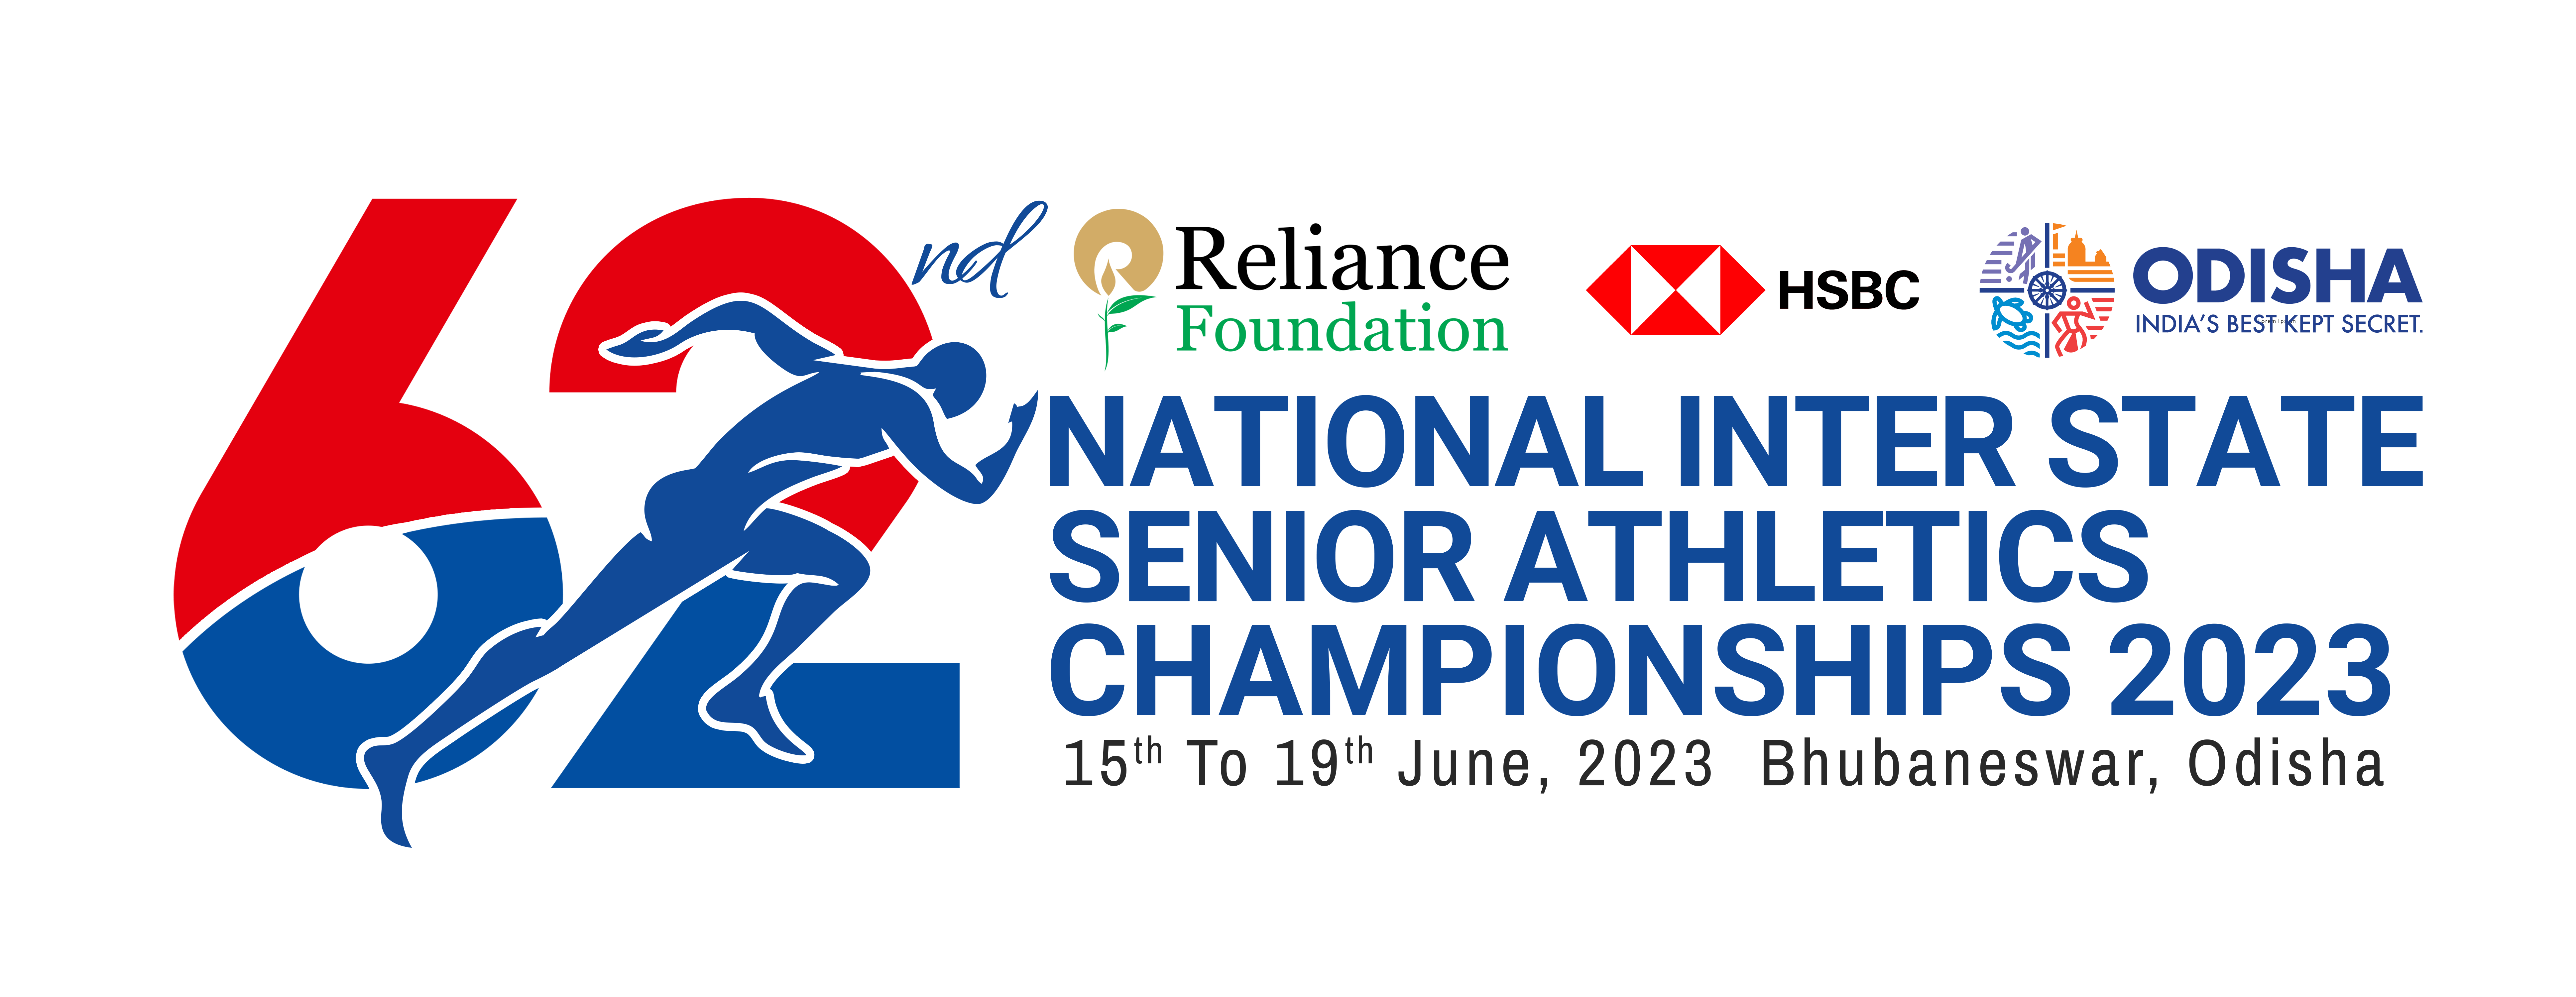 62nd National Inter State Senior Athletics Championships 2023